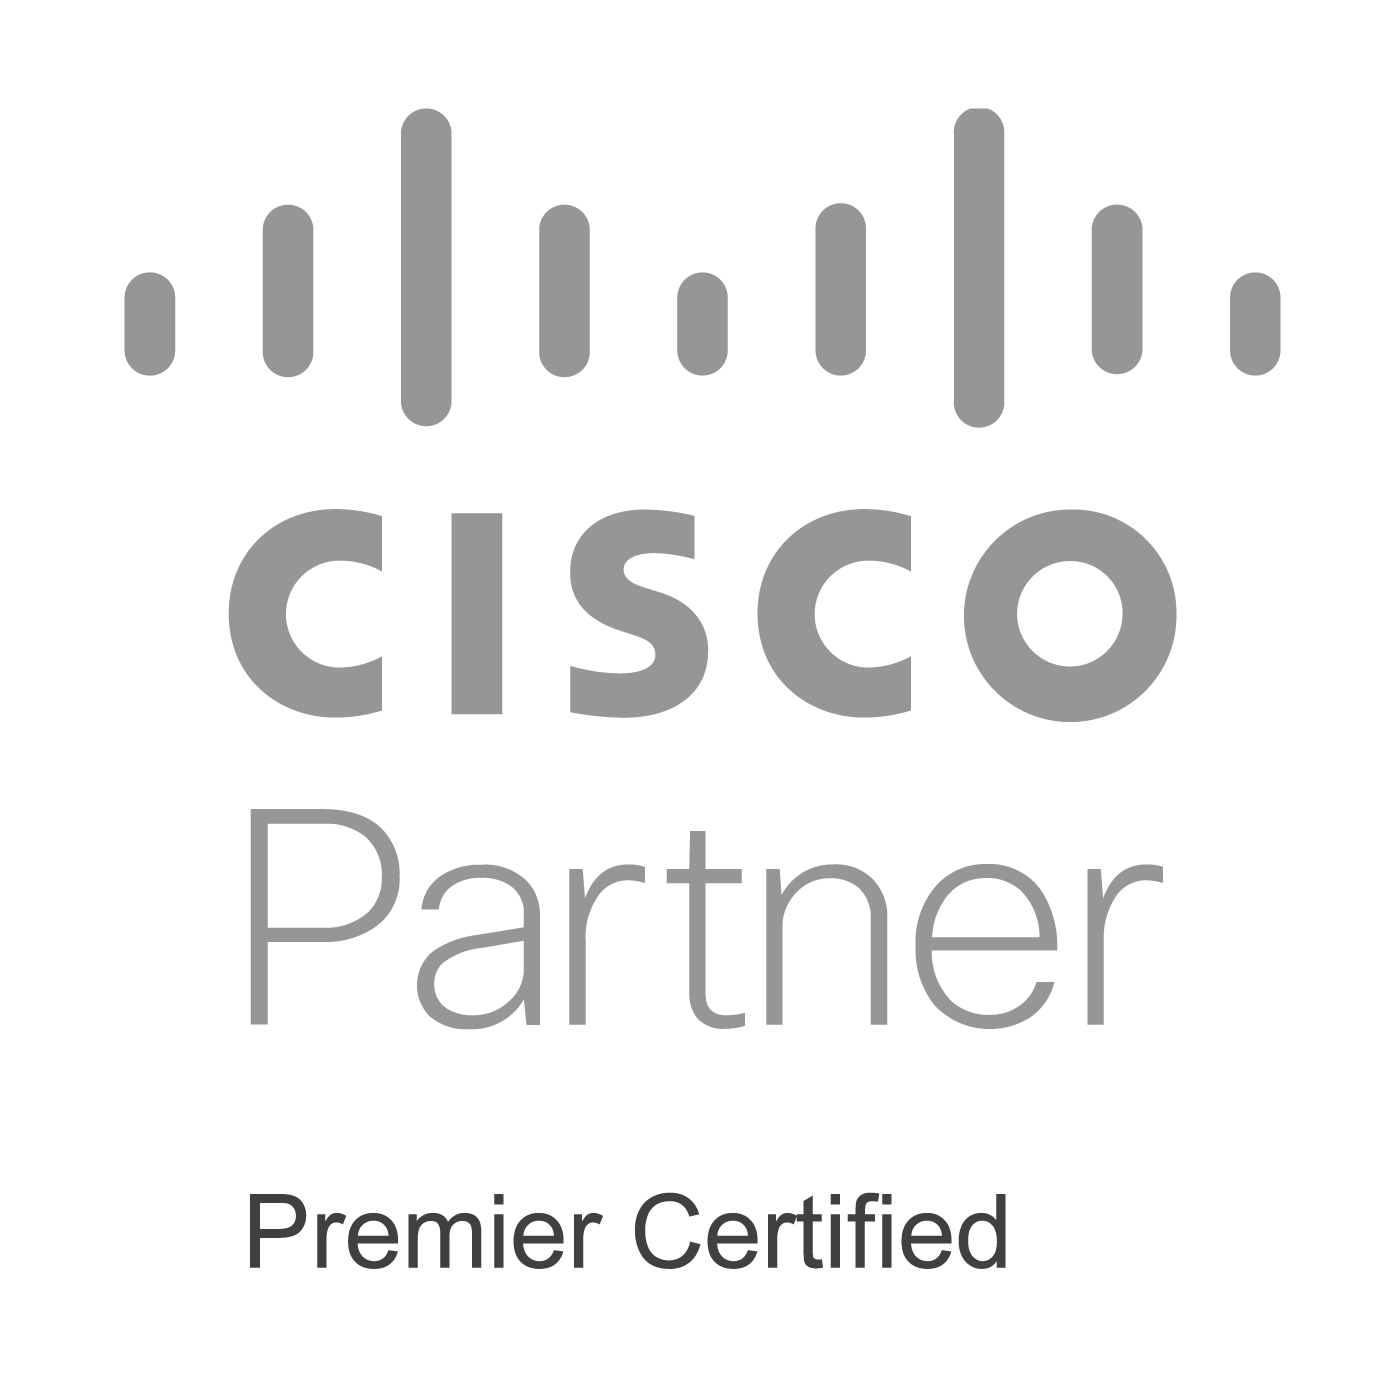 Cisco Partner Logo Premier Certified